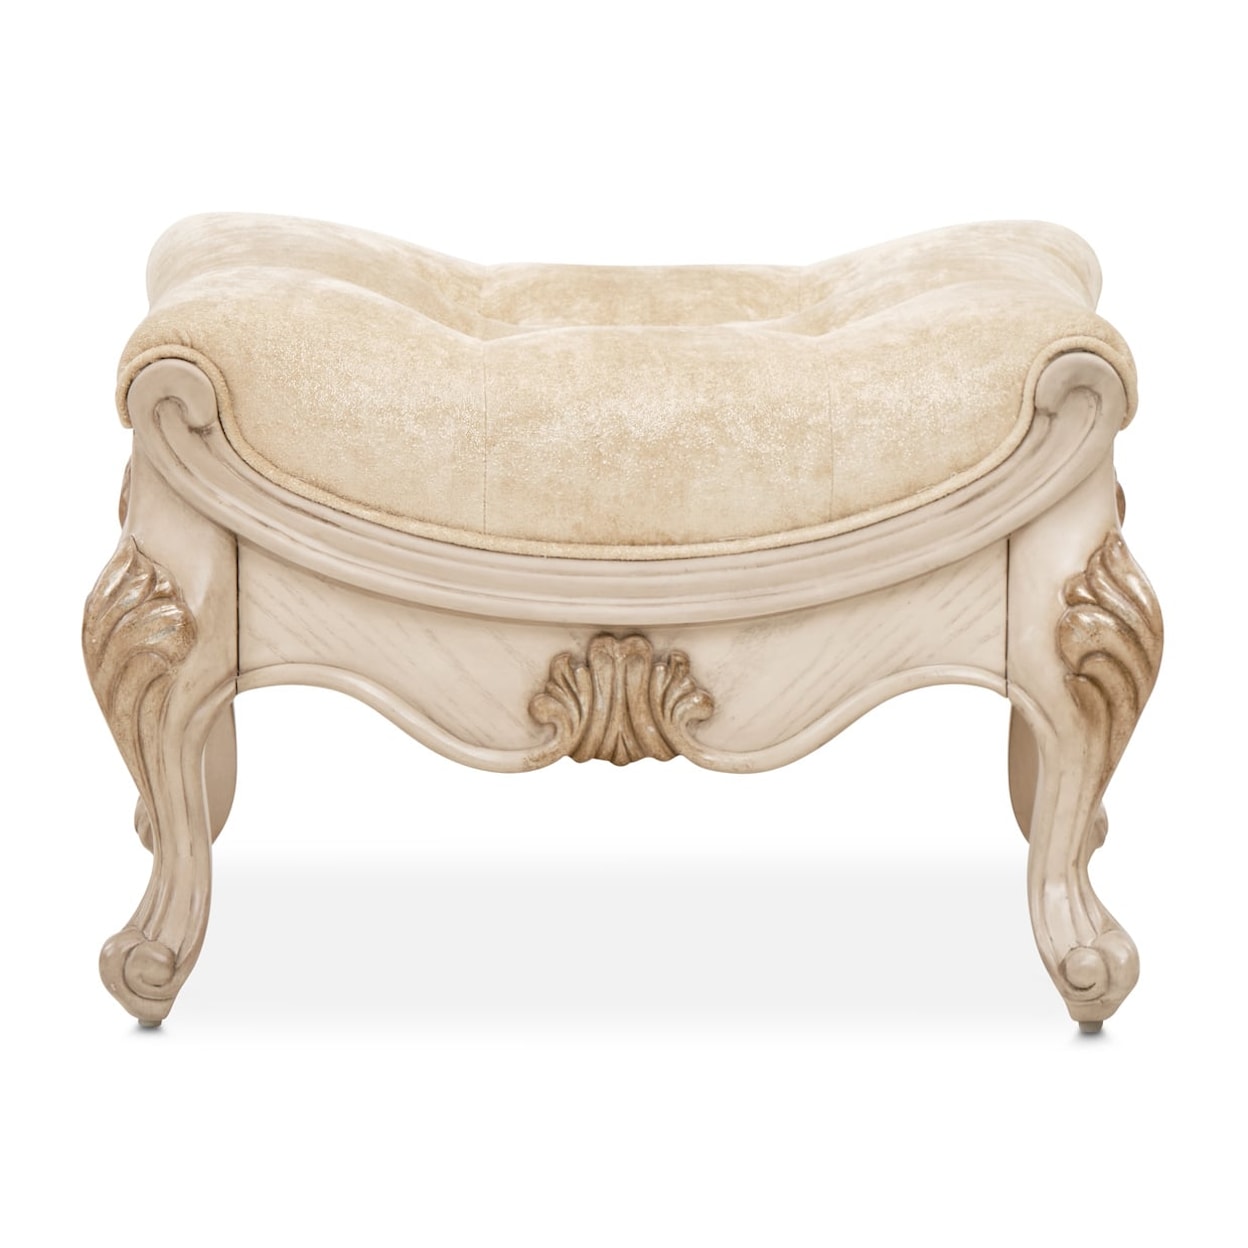 Michael Amini Platine de Royale Upholstered Vanity Bench